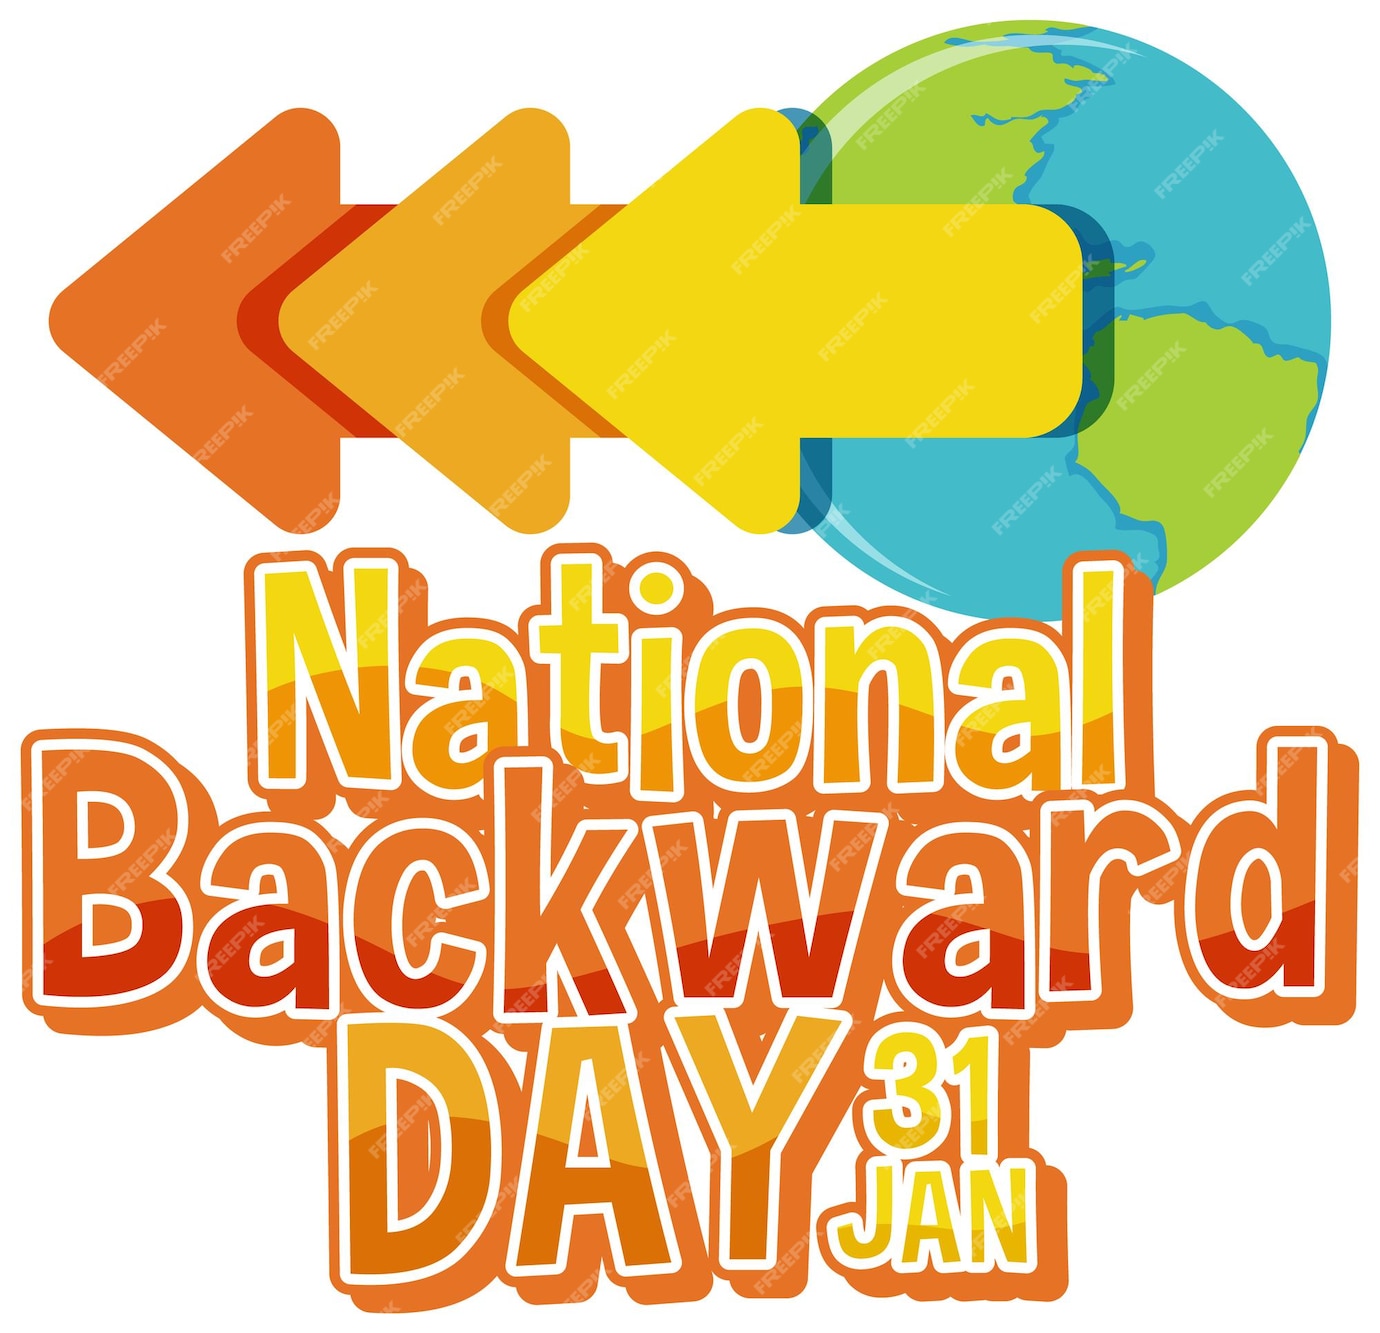 Free Vector National backward day banner design